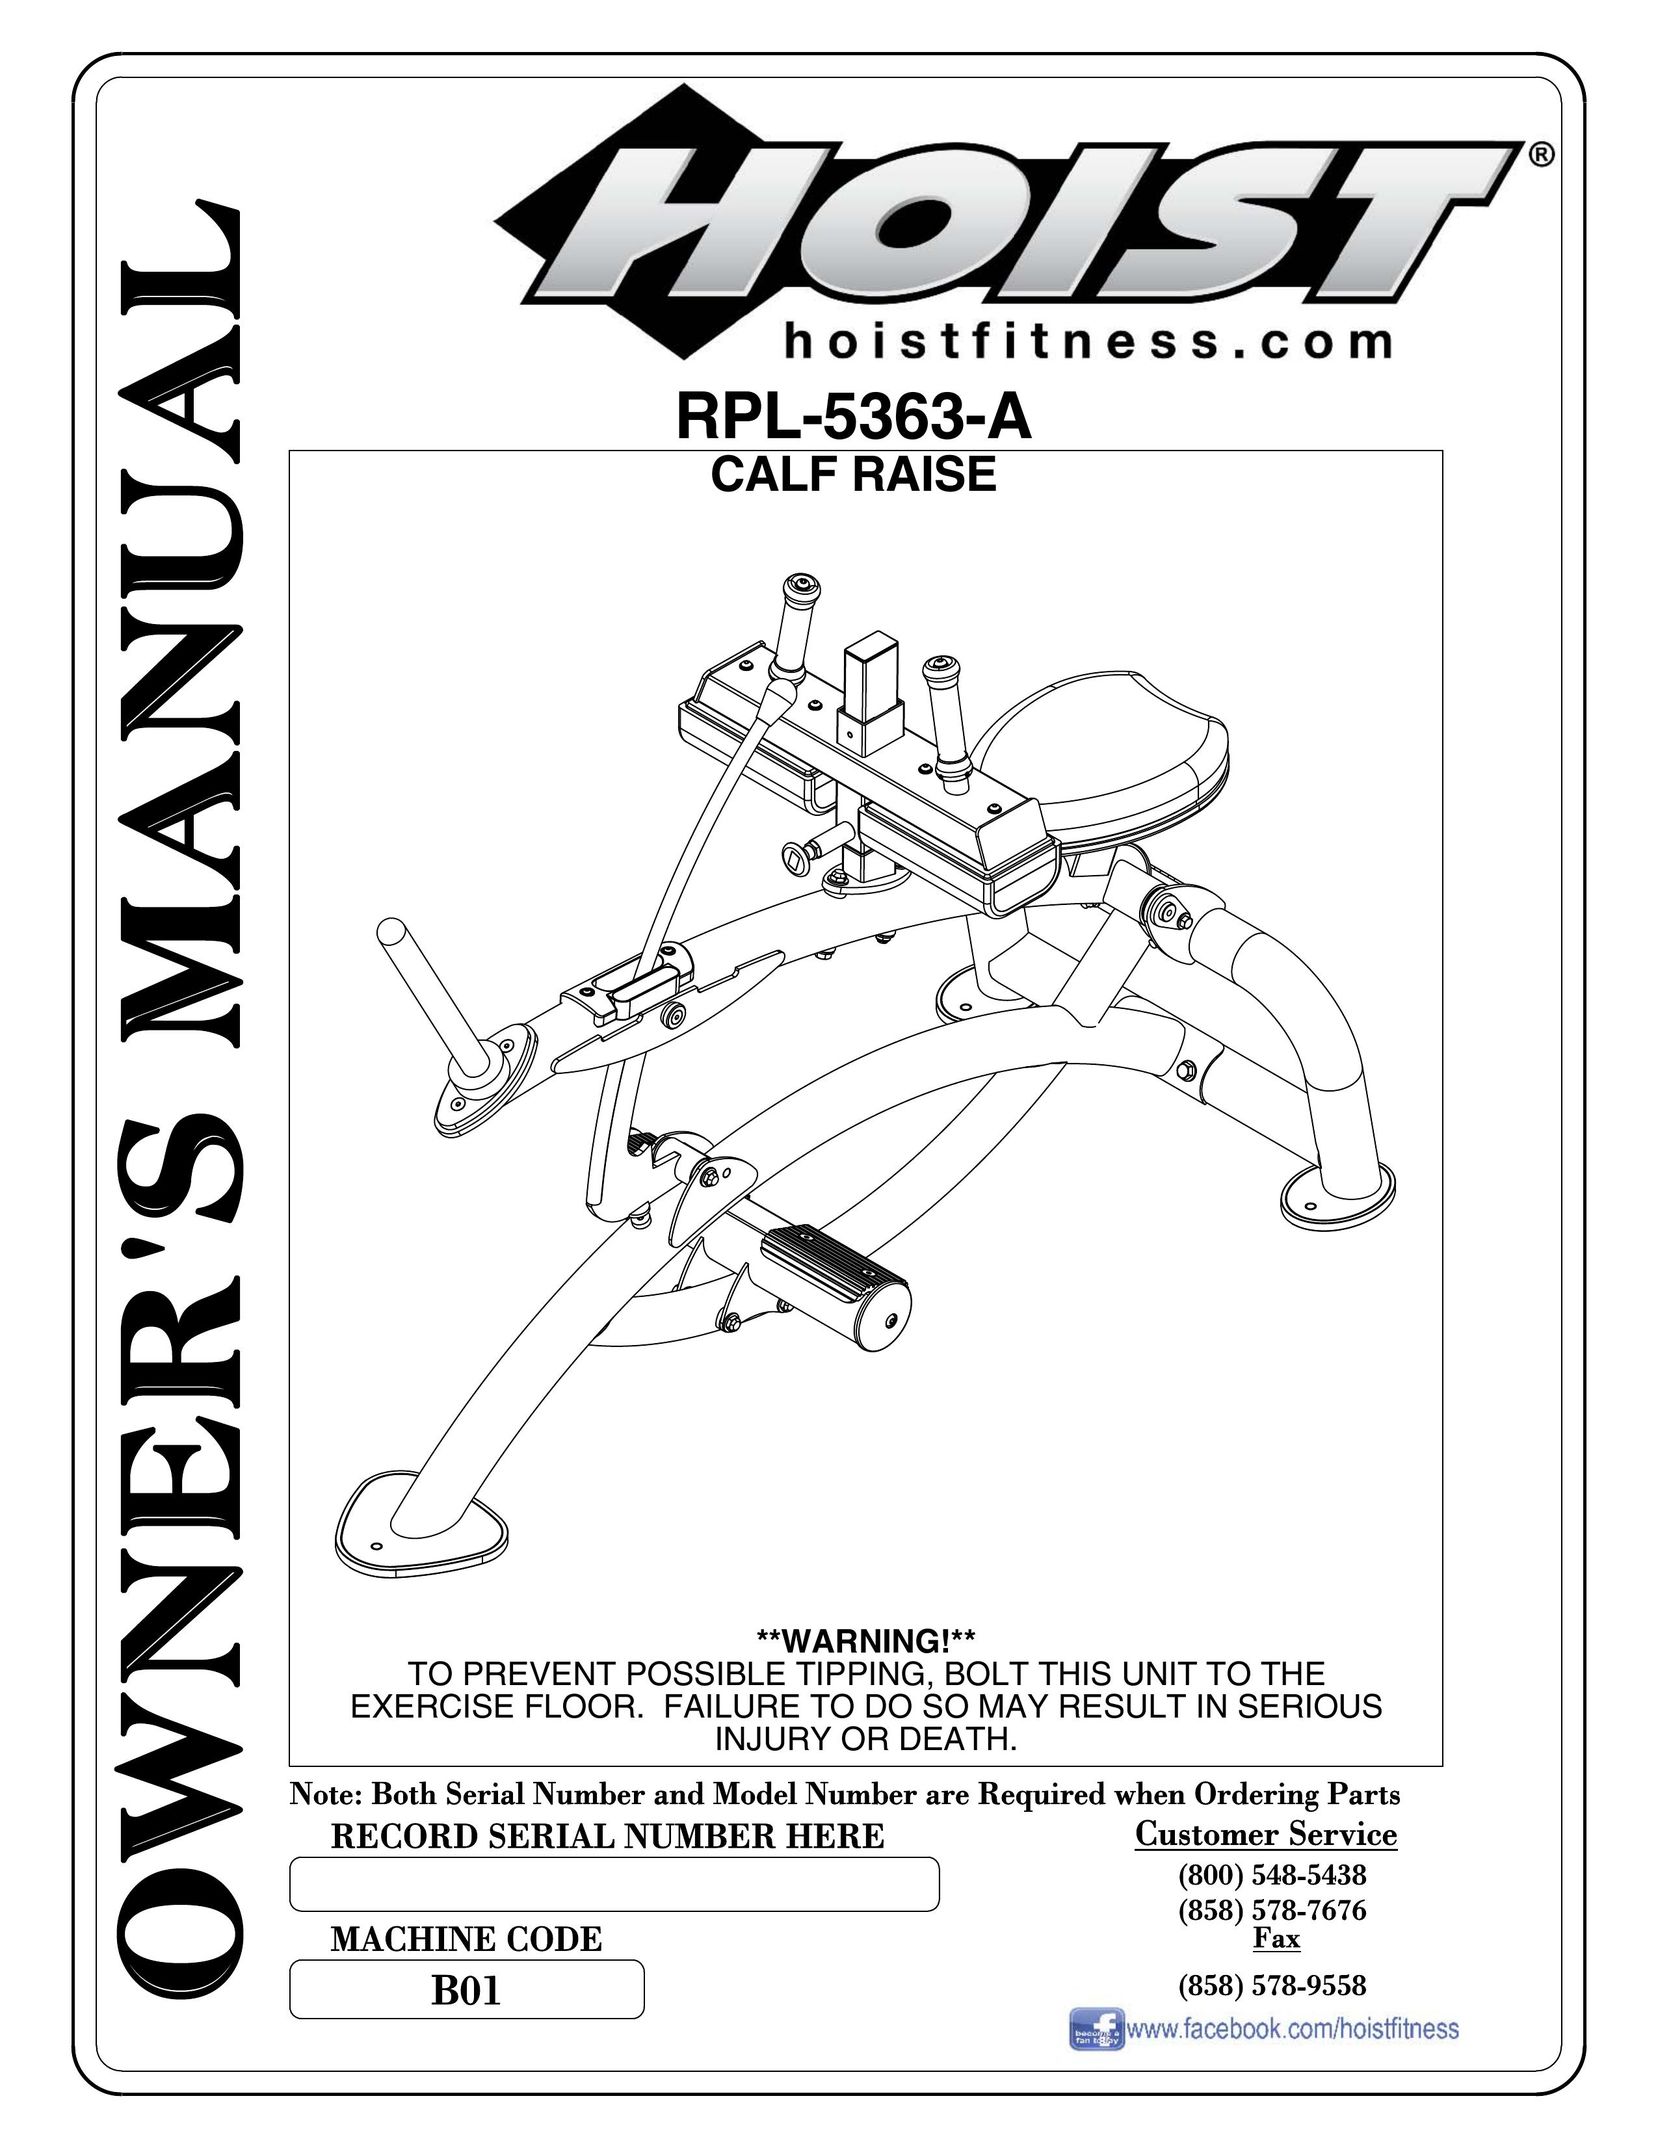 Hoist Fitness RPL-5363-A Baby Gym User Manual